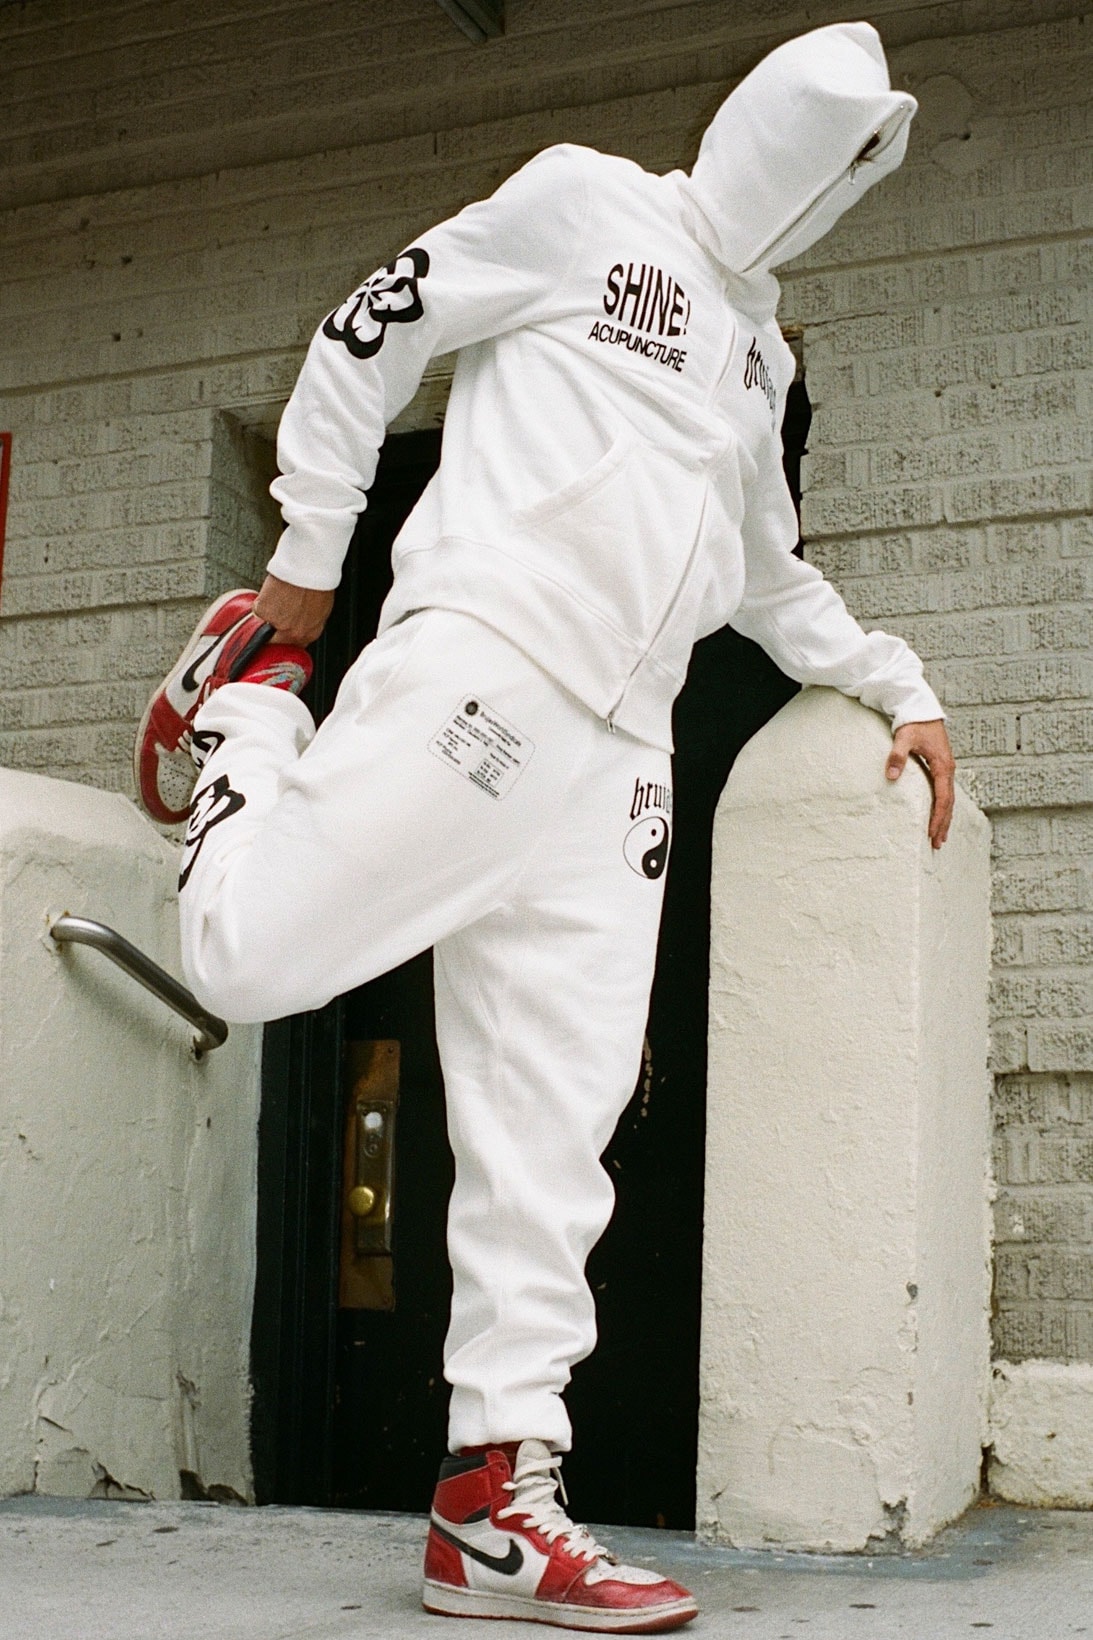 BRUJAS "WORLD SHINE" Collection white sweatsuit ying yang